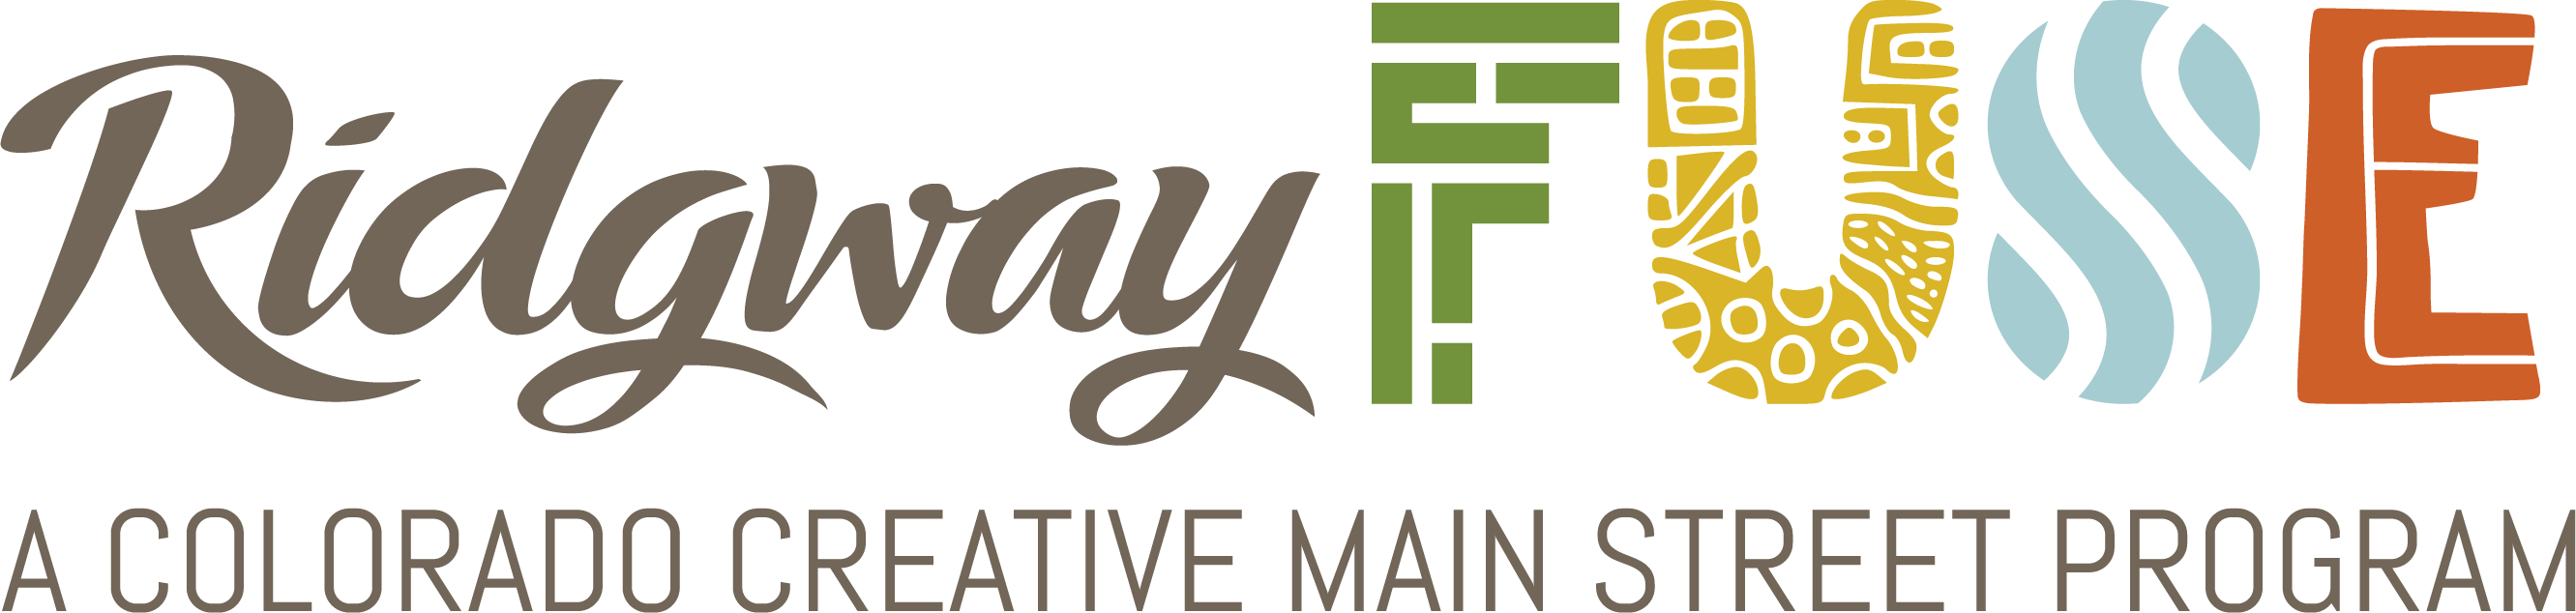 Image of Ridgway Creative District Logo.